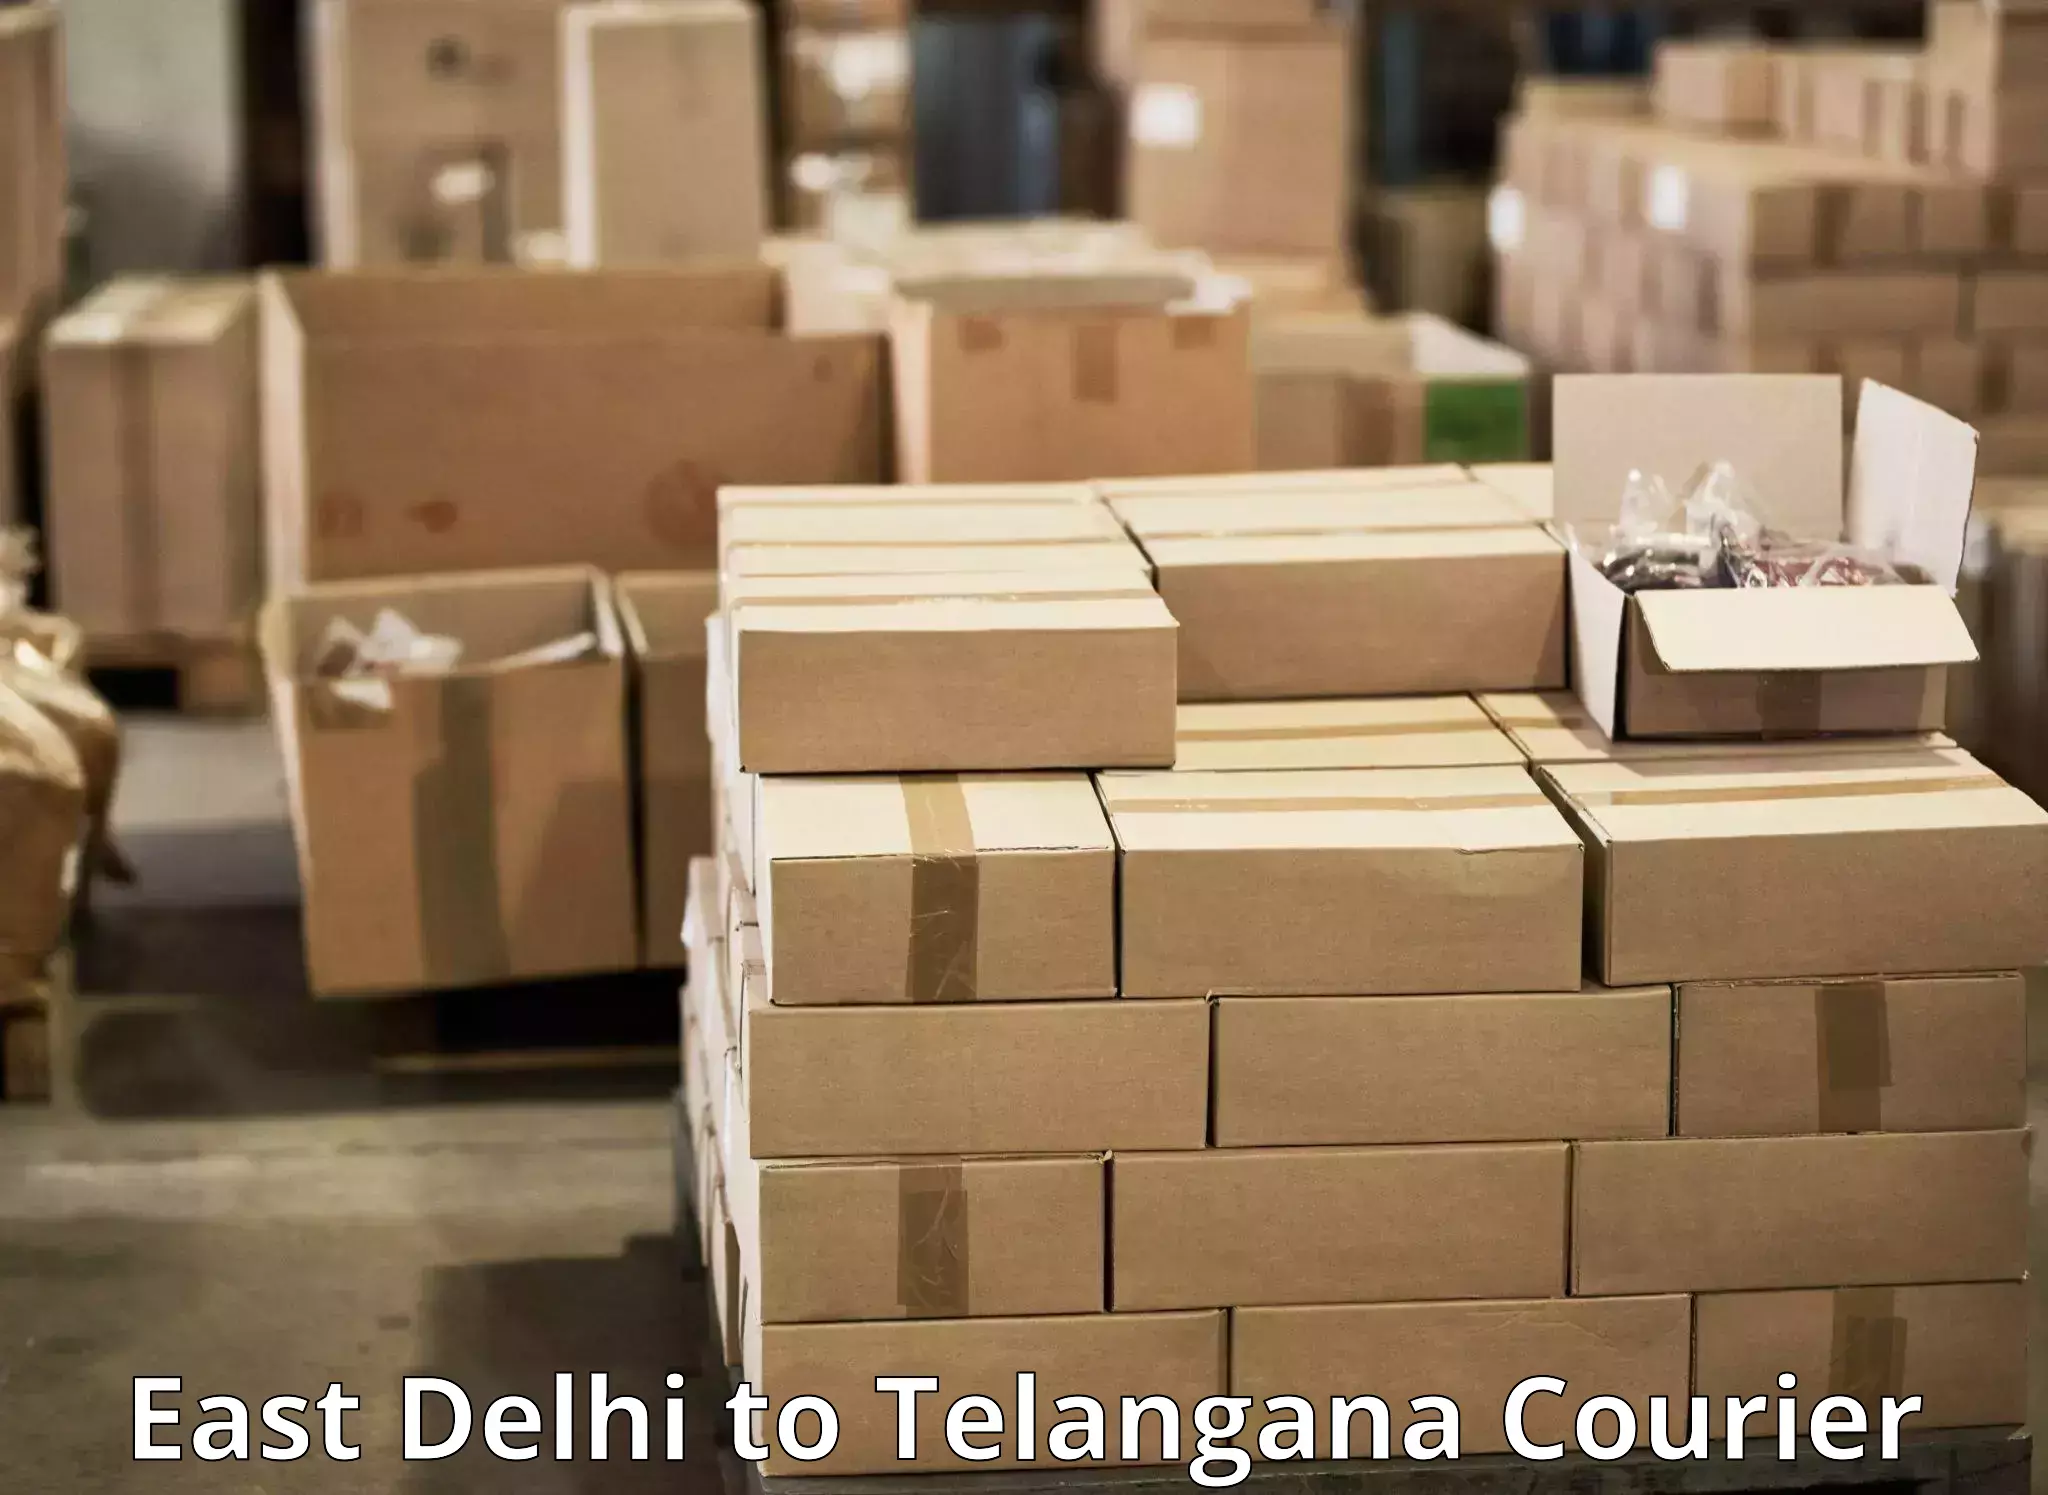 Global logistics network East Delhi to Manneguda